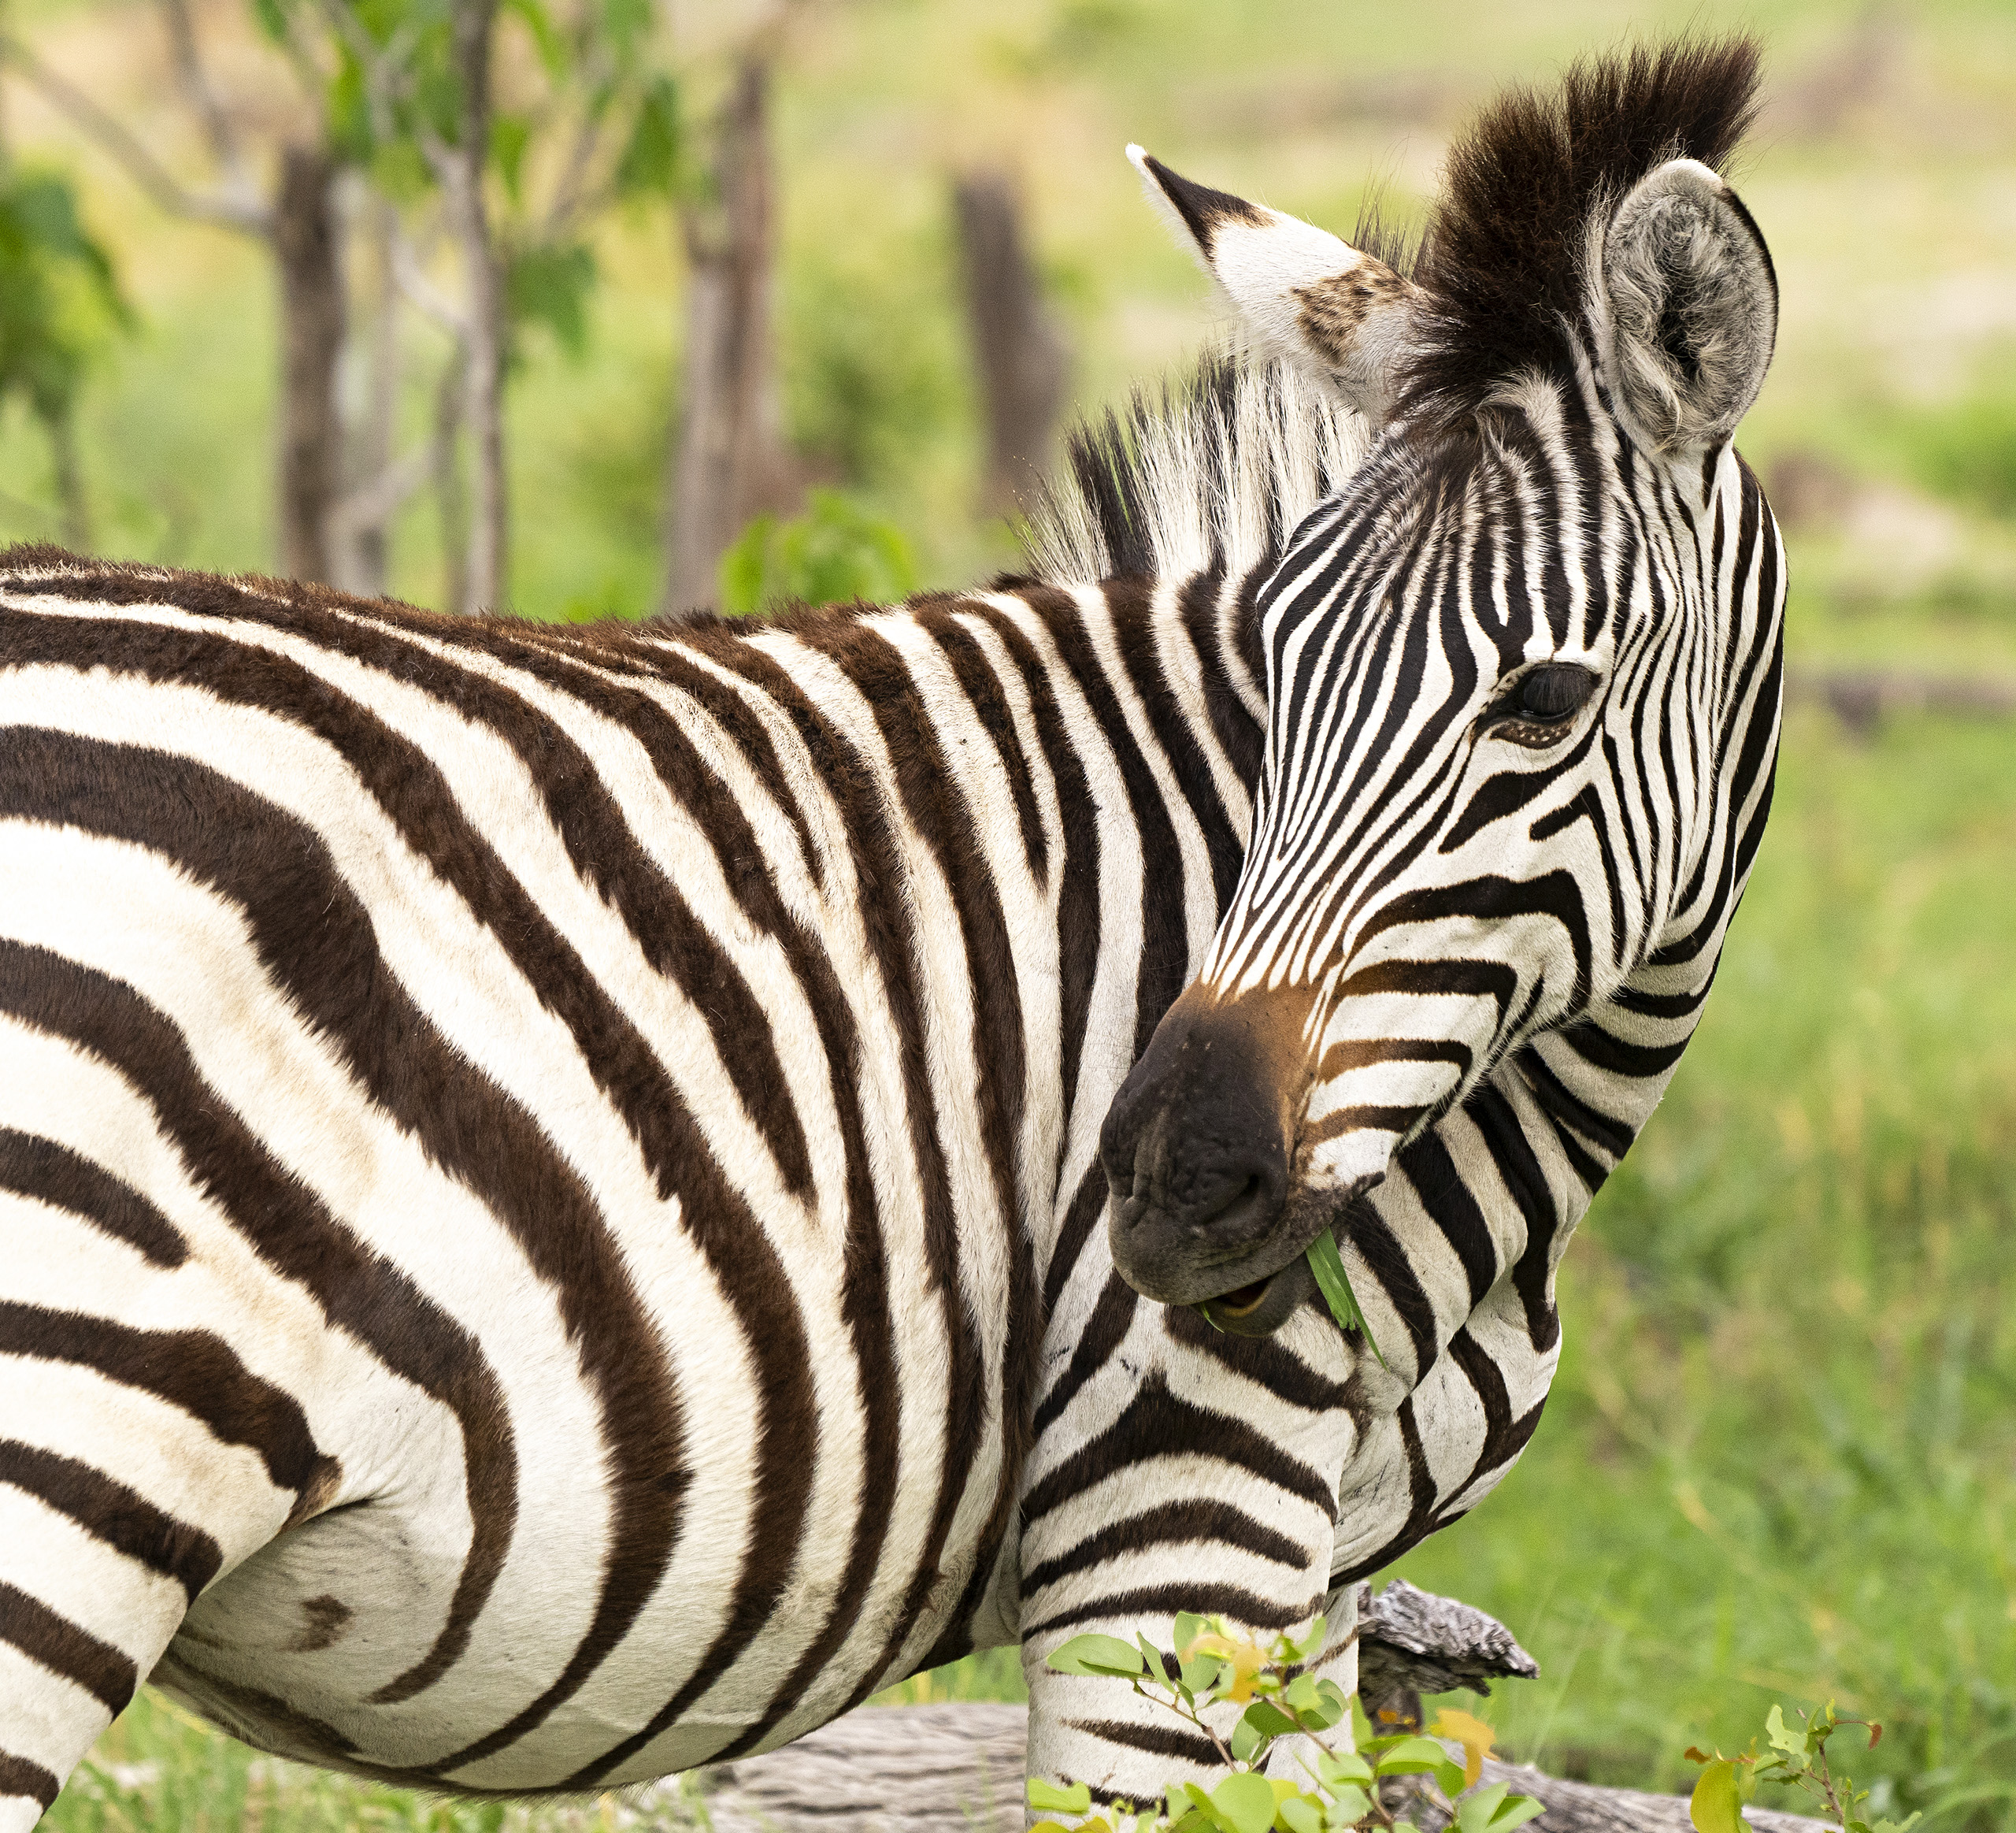 Zebra chewing grass